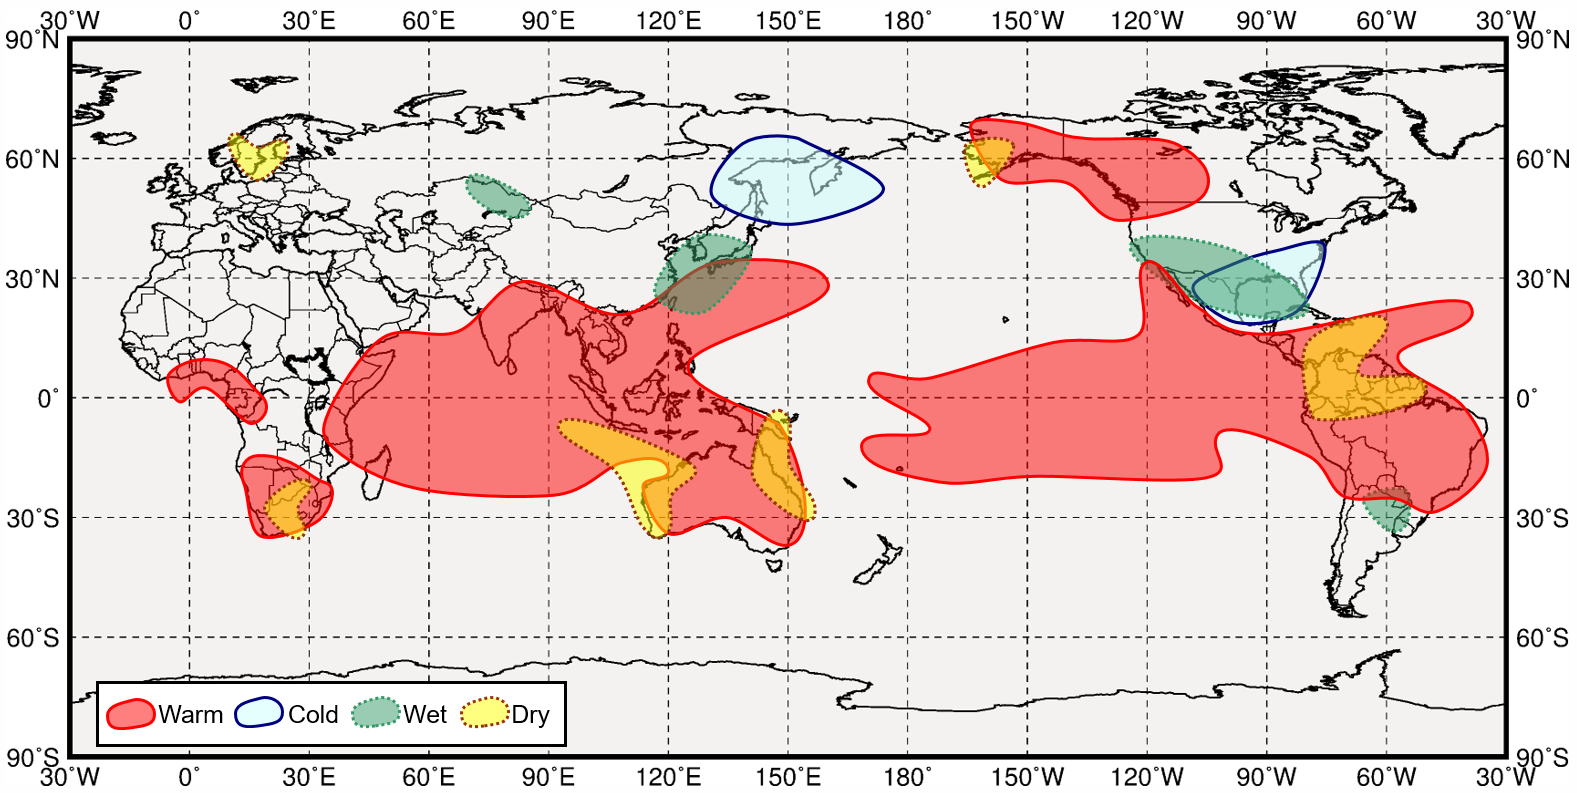 Impacts of El Niño/La Niña and Indian Ocean Dipole events on the Global